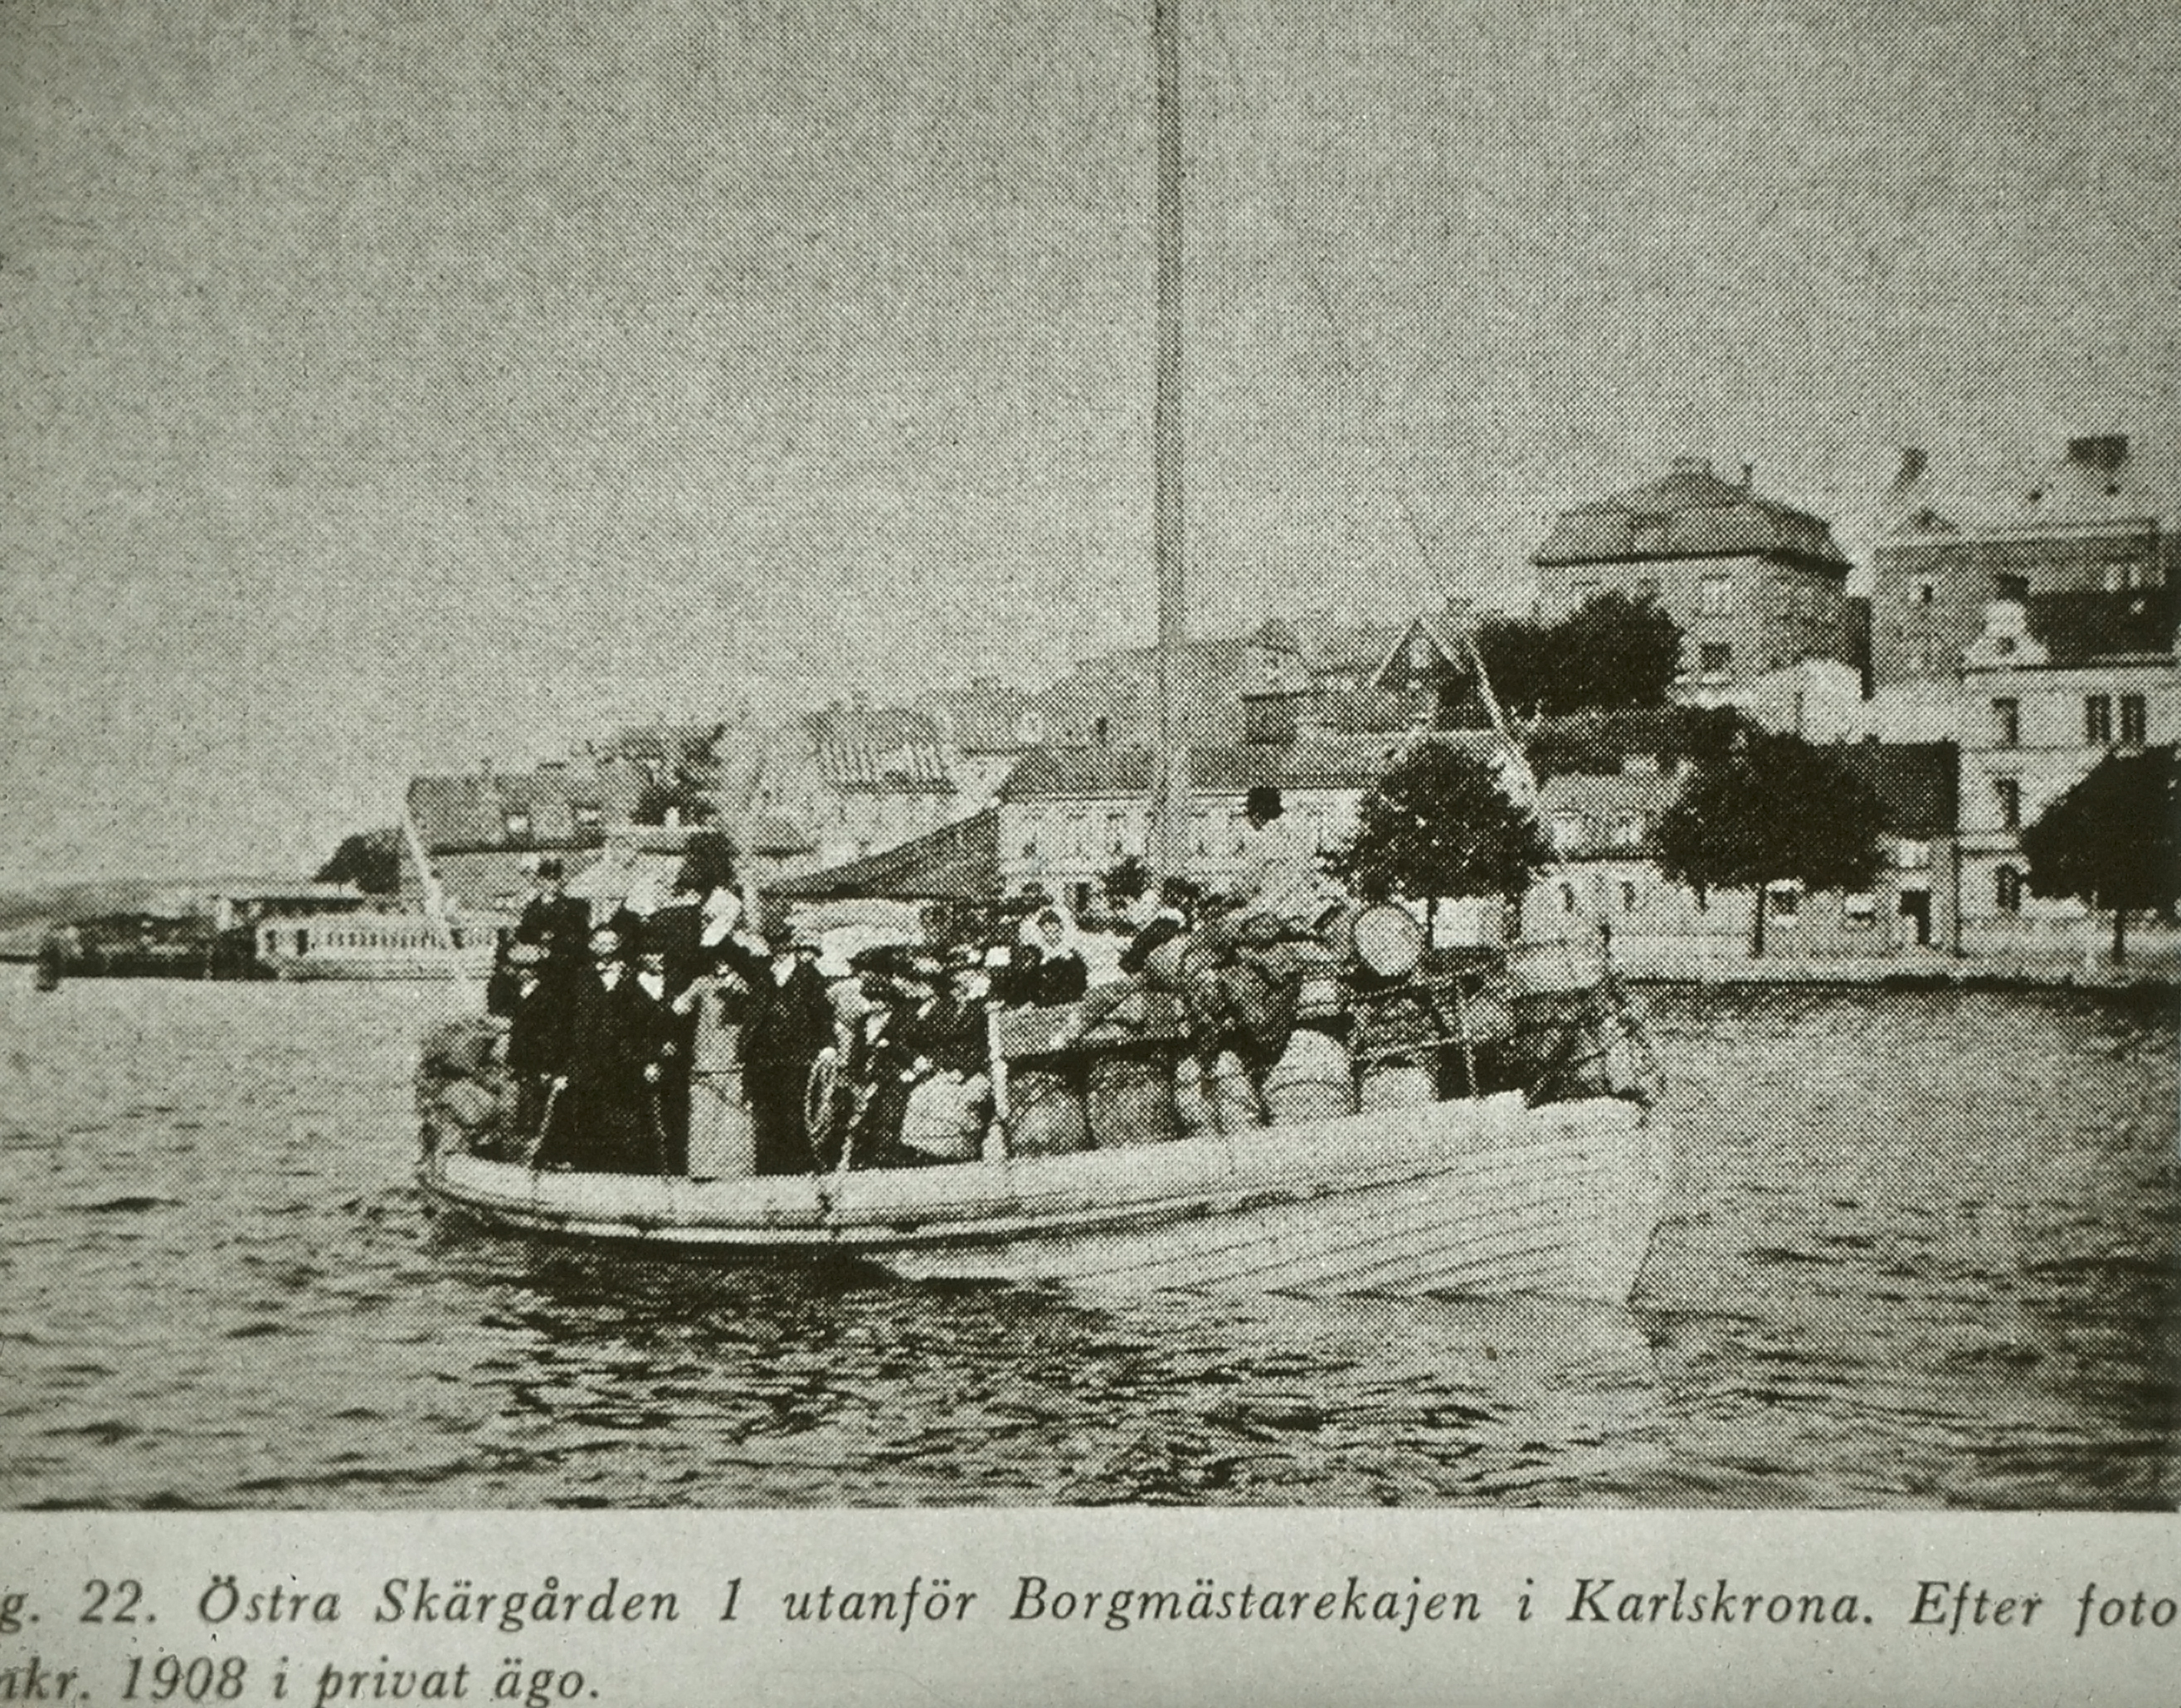 
Ã–stra skÃ¤rgÃ¥rden I utanfÃ¶r BorgmÃ¤starekajen i Karlskrona. Foto omkring 1908.





